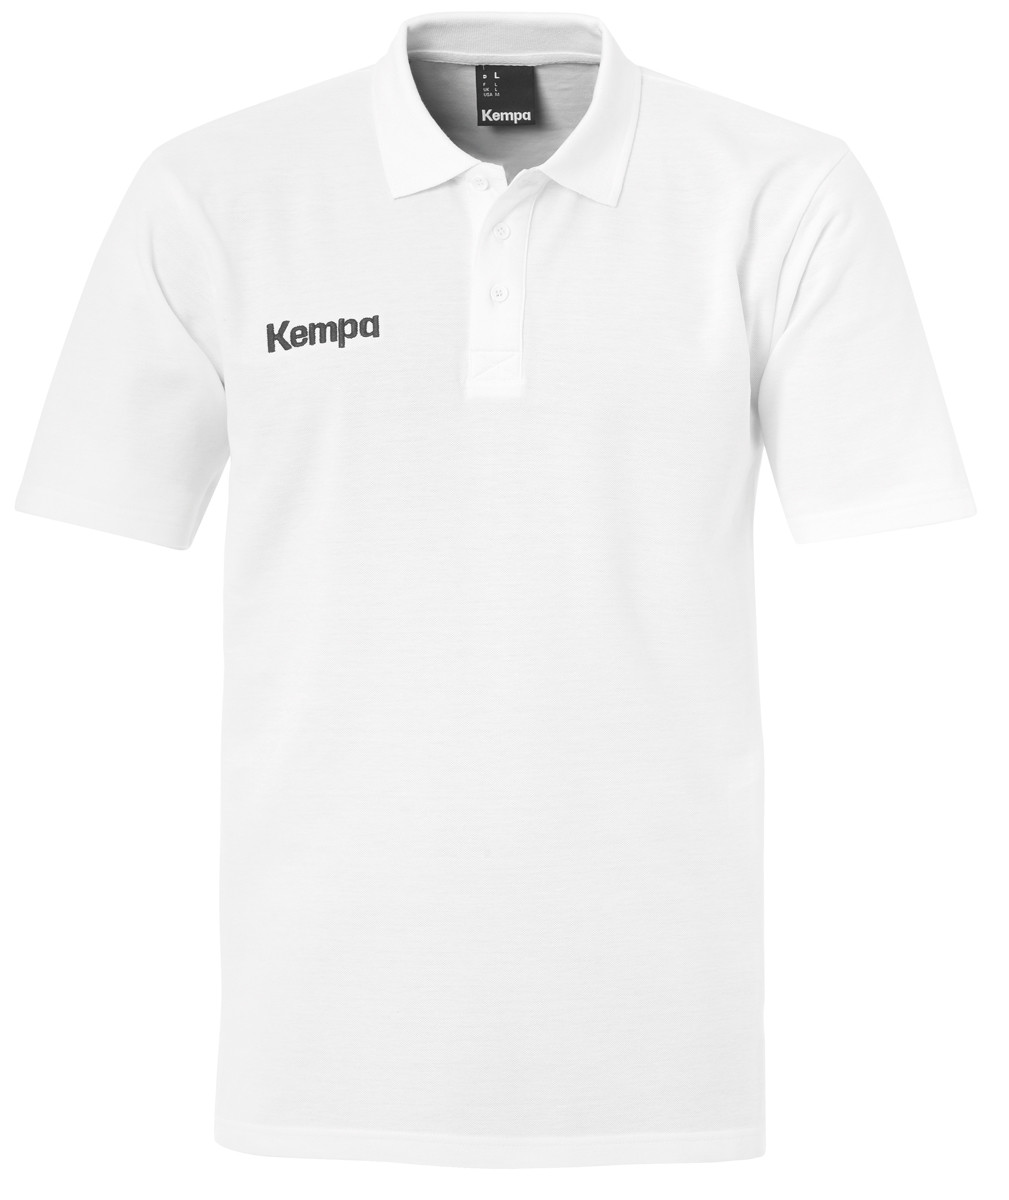 Kempa Classic Polo Shirt Kinder